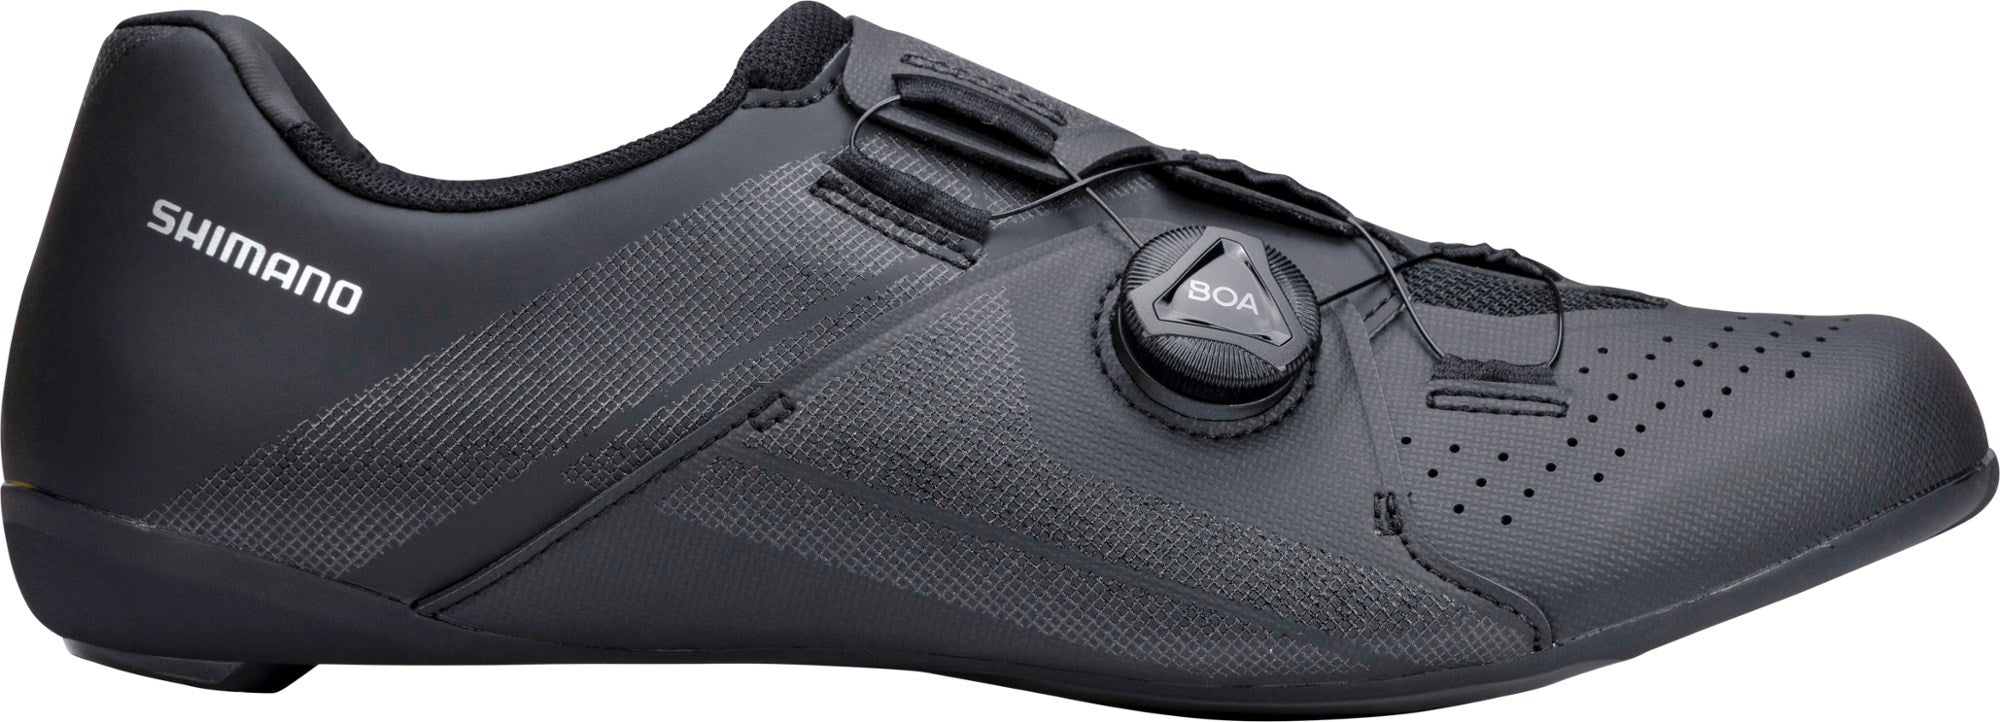 Photos - Cycling Shoes Shimano RC3 Road Shoes - Black - 46 ESHRC300MGL01S4600G 